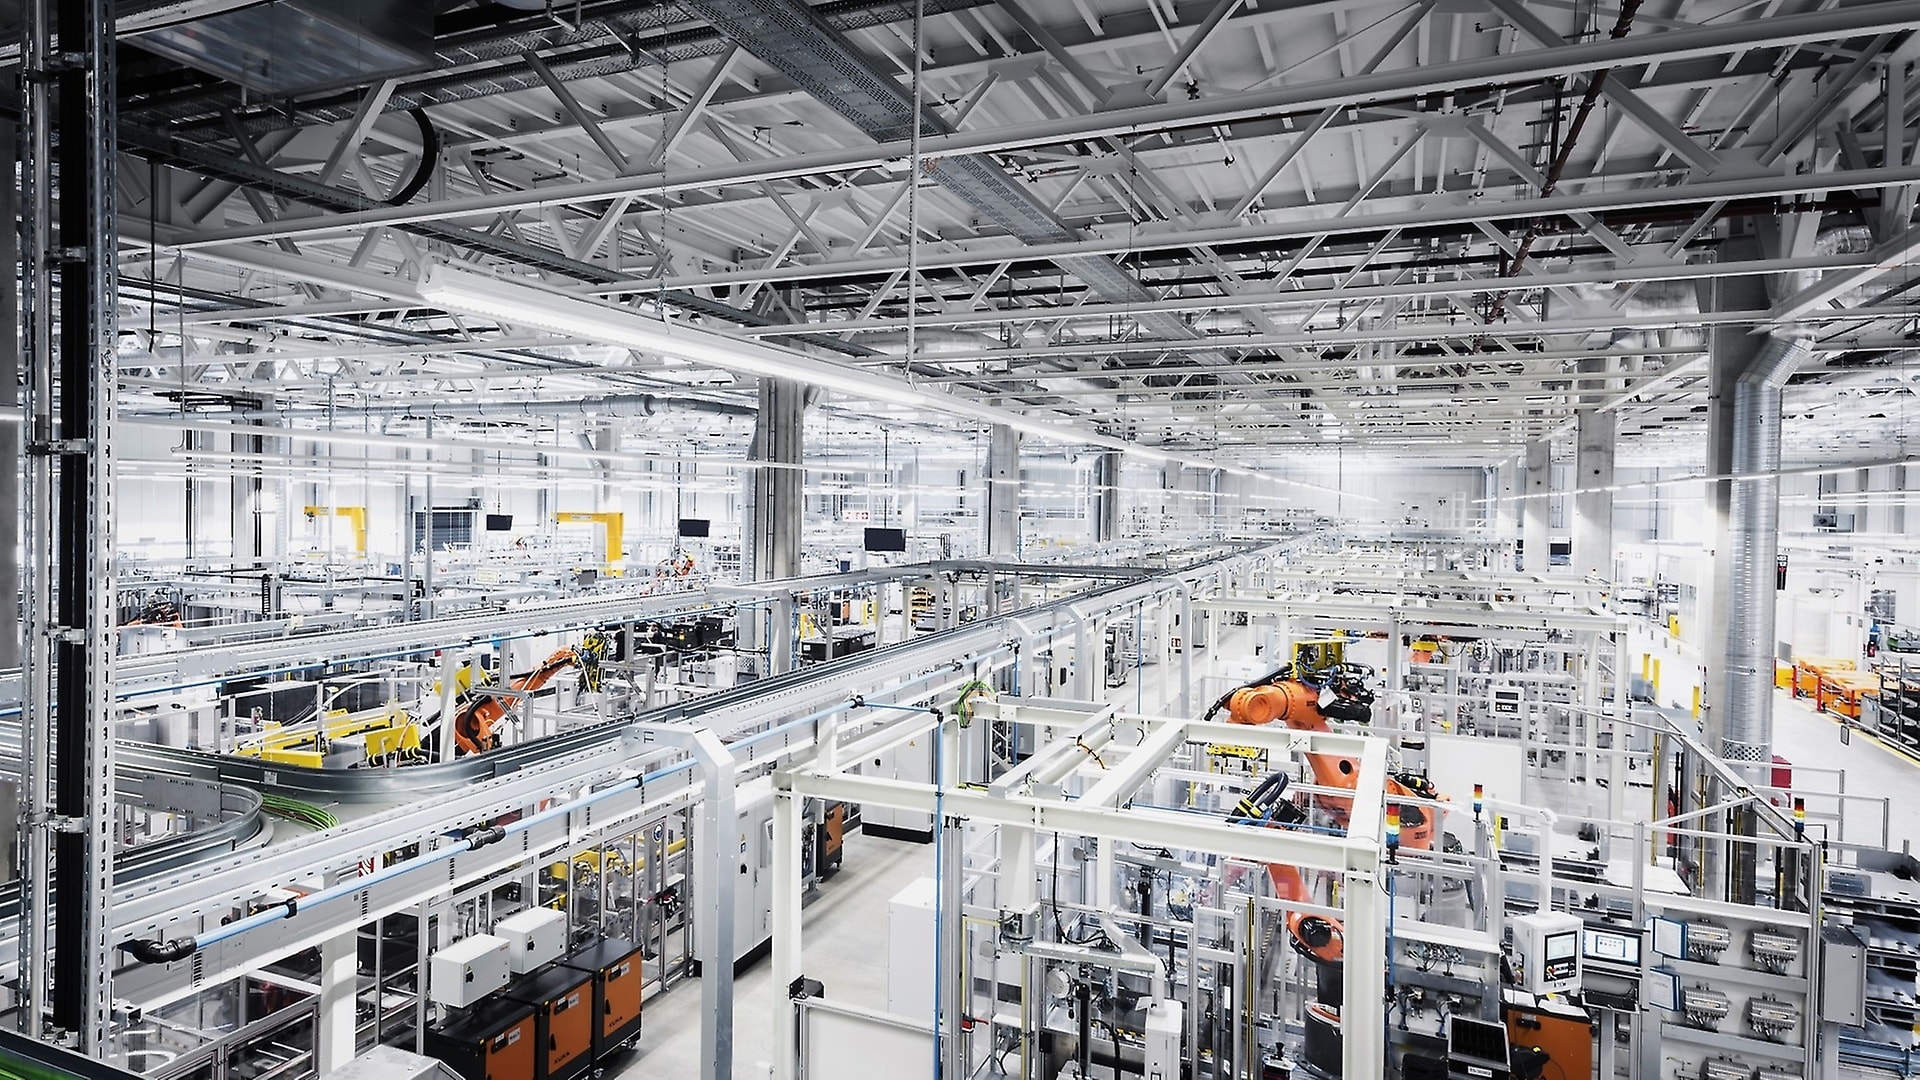 A glimpse into the battery factory at the Mercedes-Benz plant Untertürkheim (Brühl part).